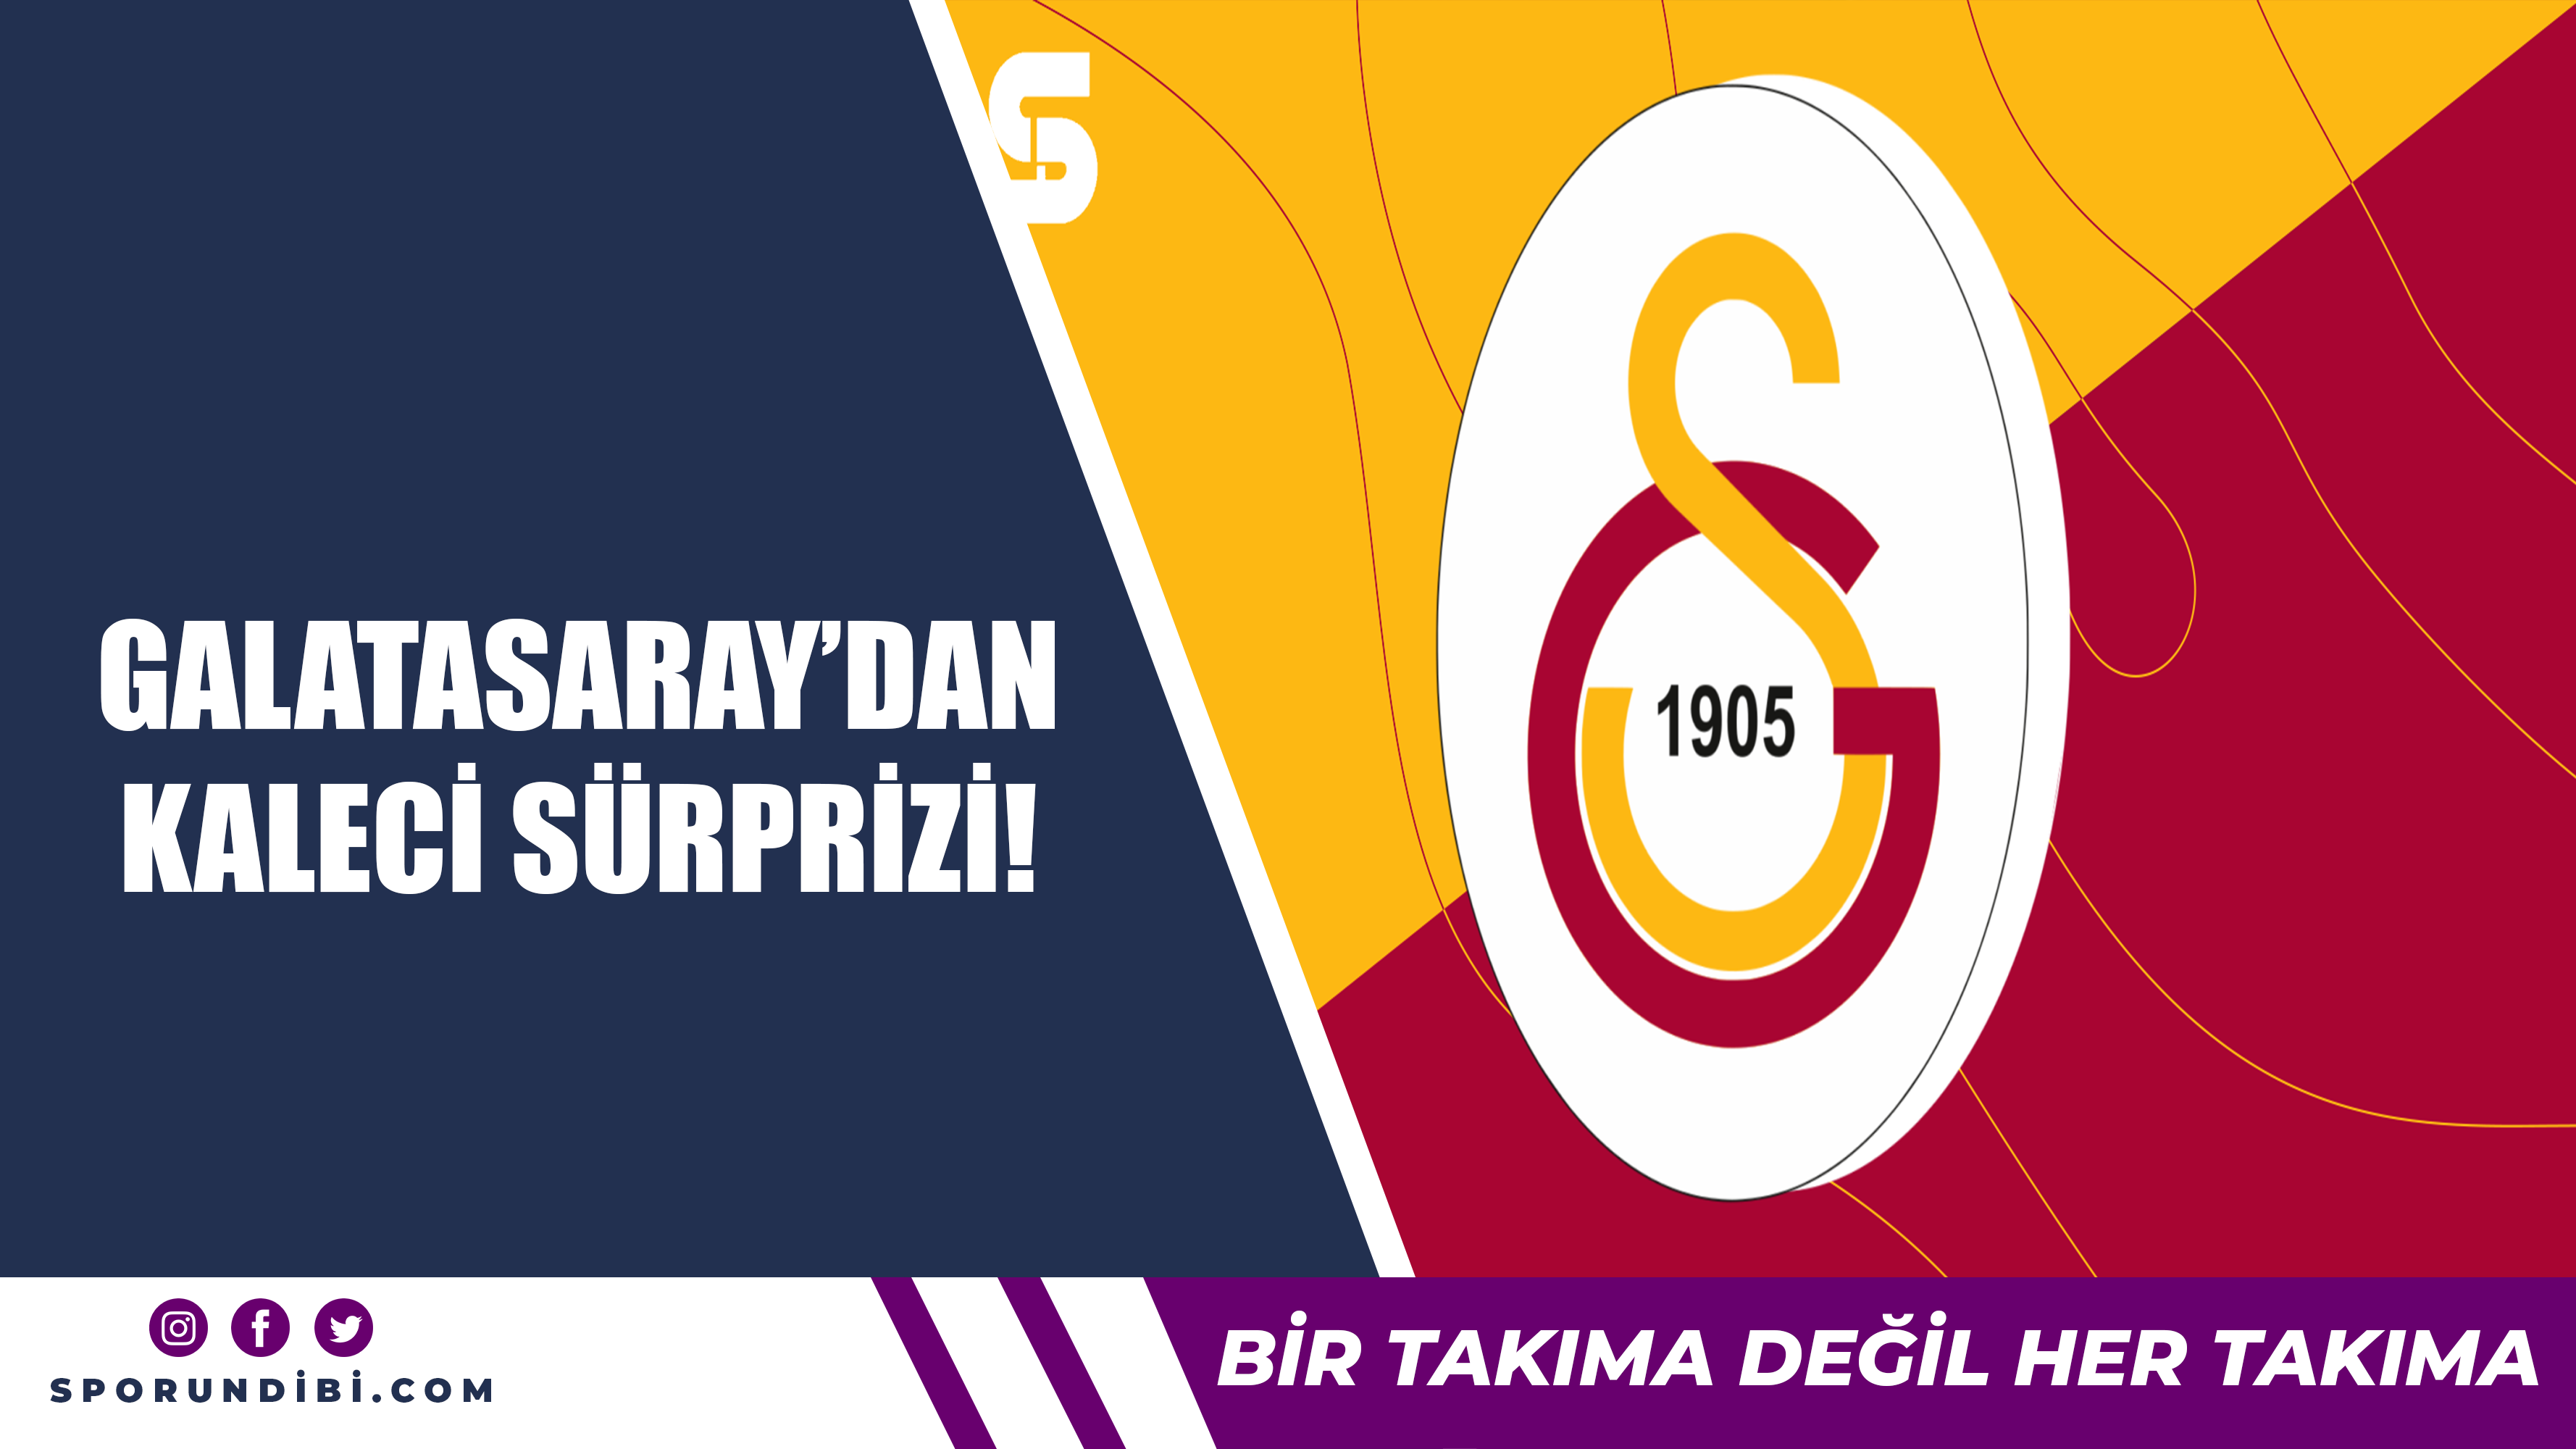 Galatasaray'dan kaleci sürprizi!